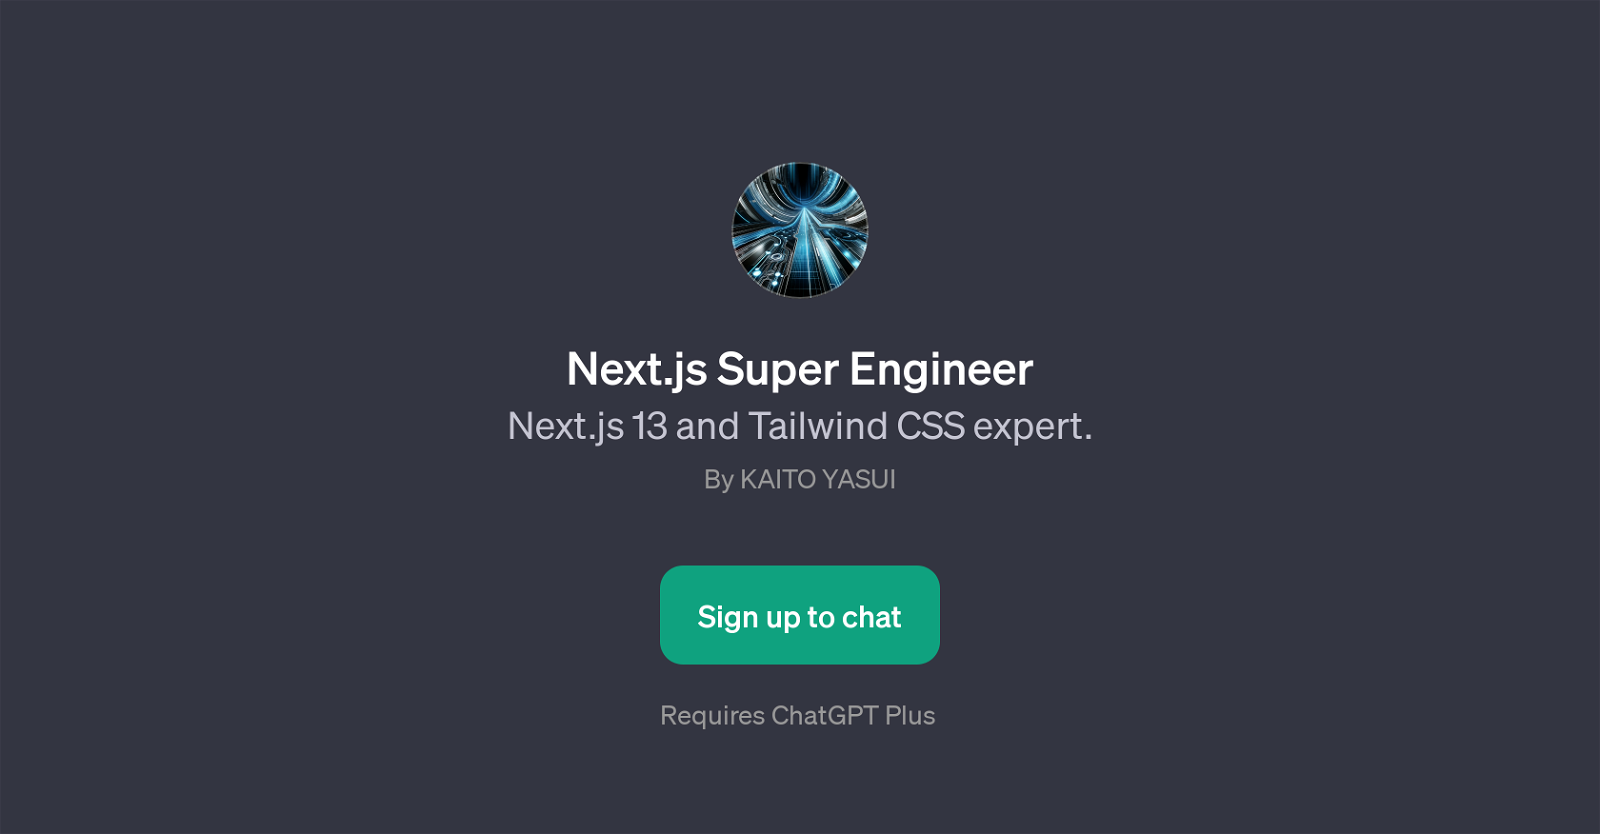 Next.js Super Engineer website